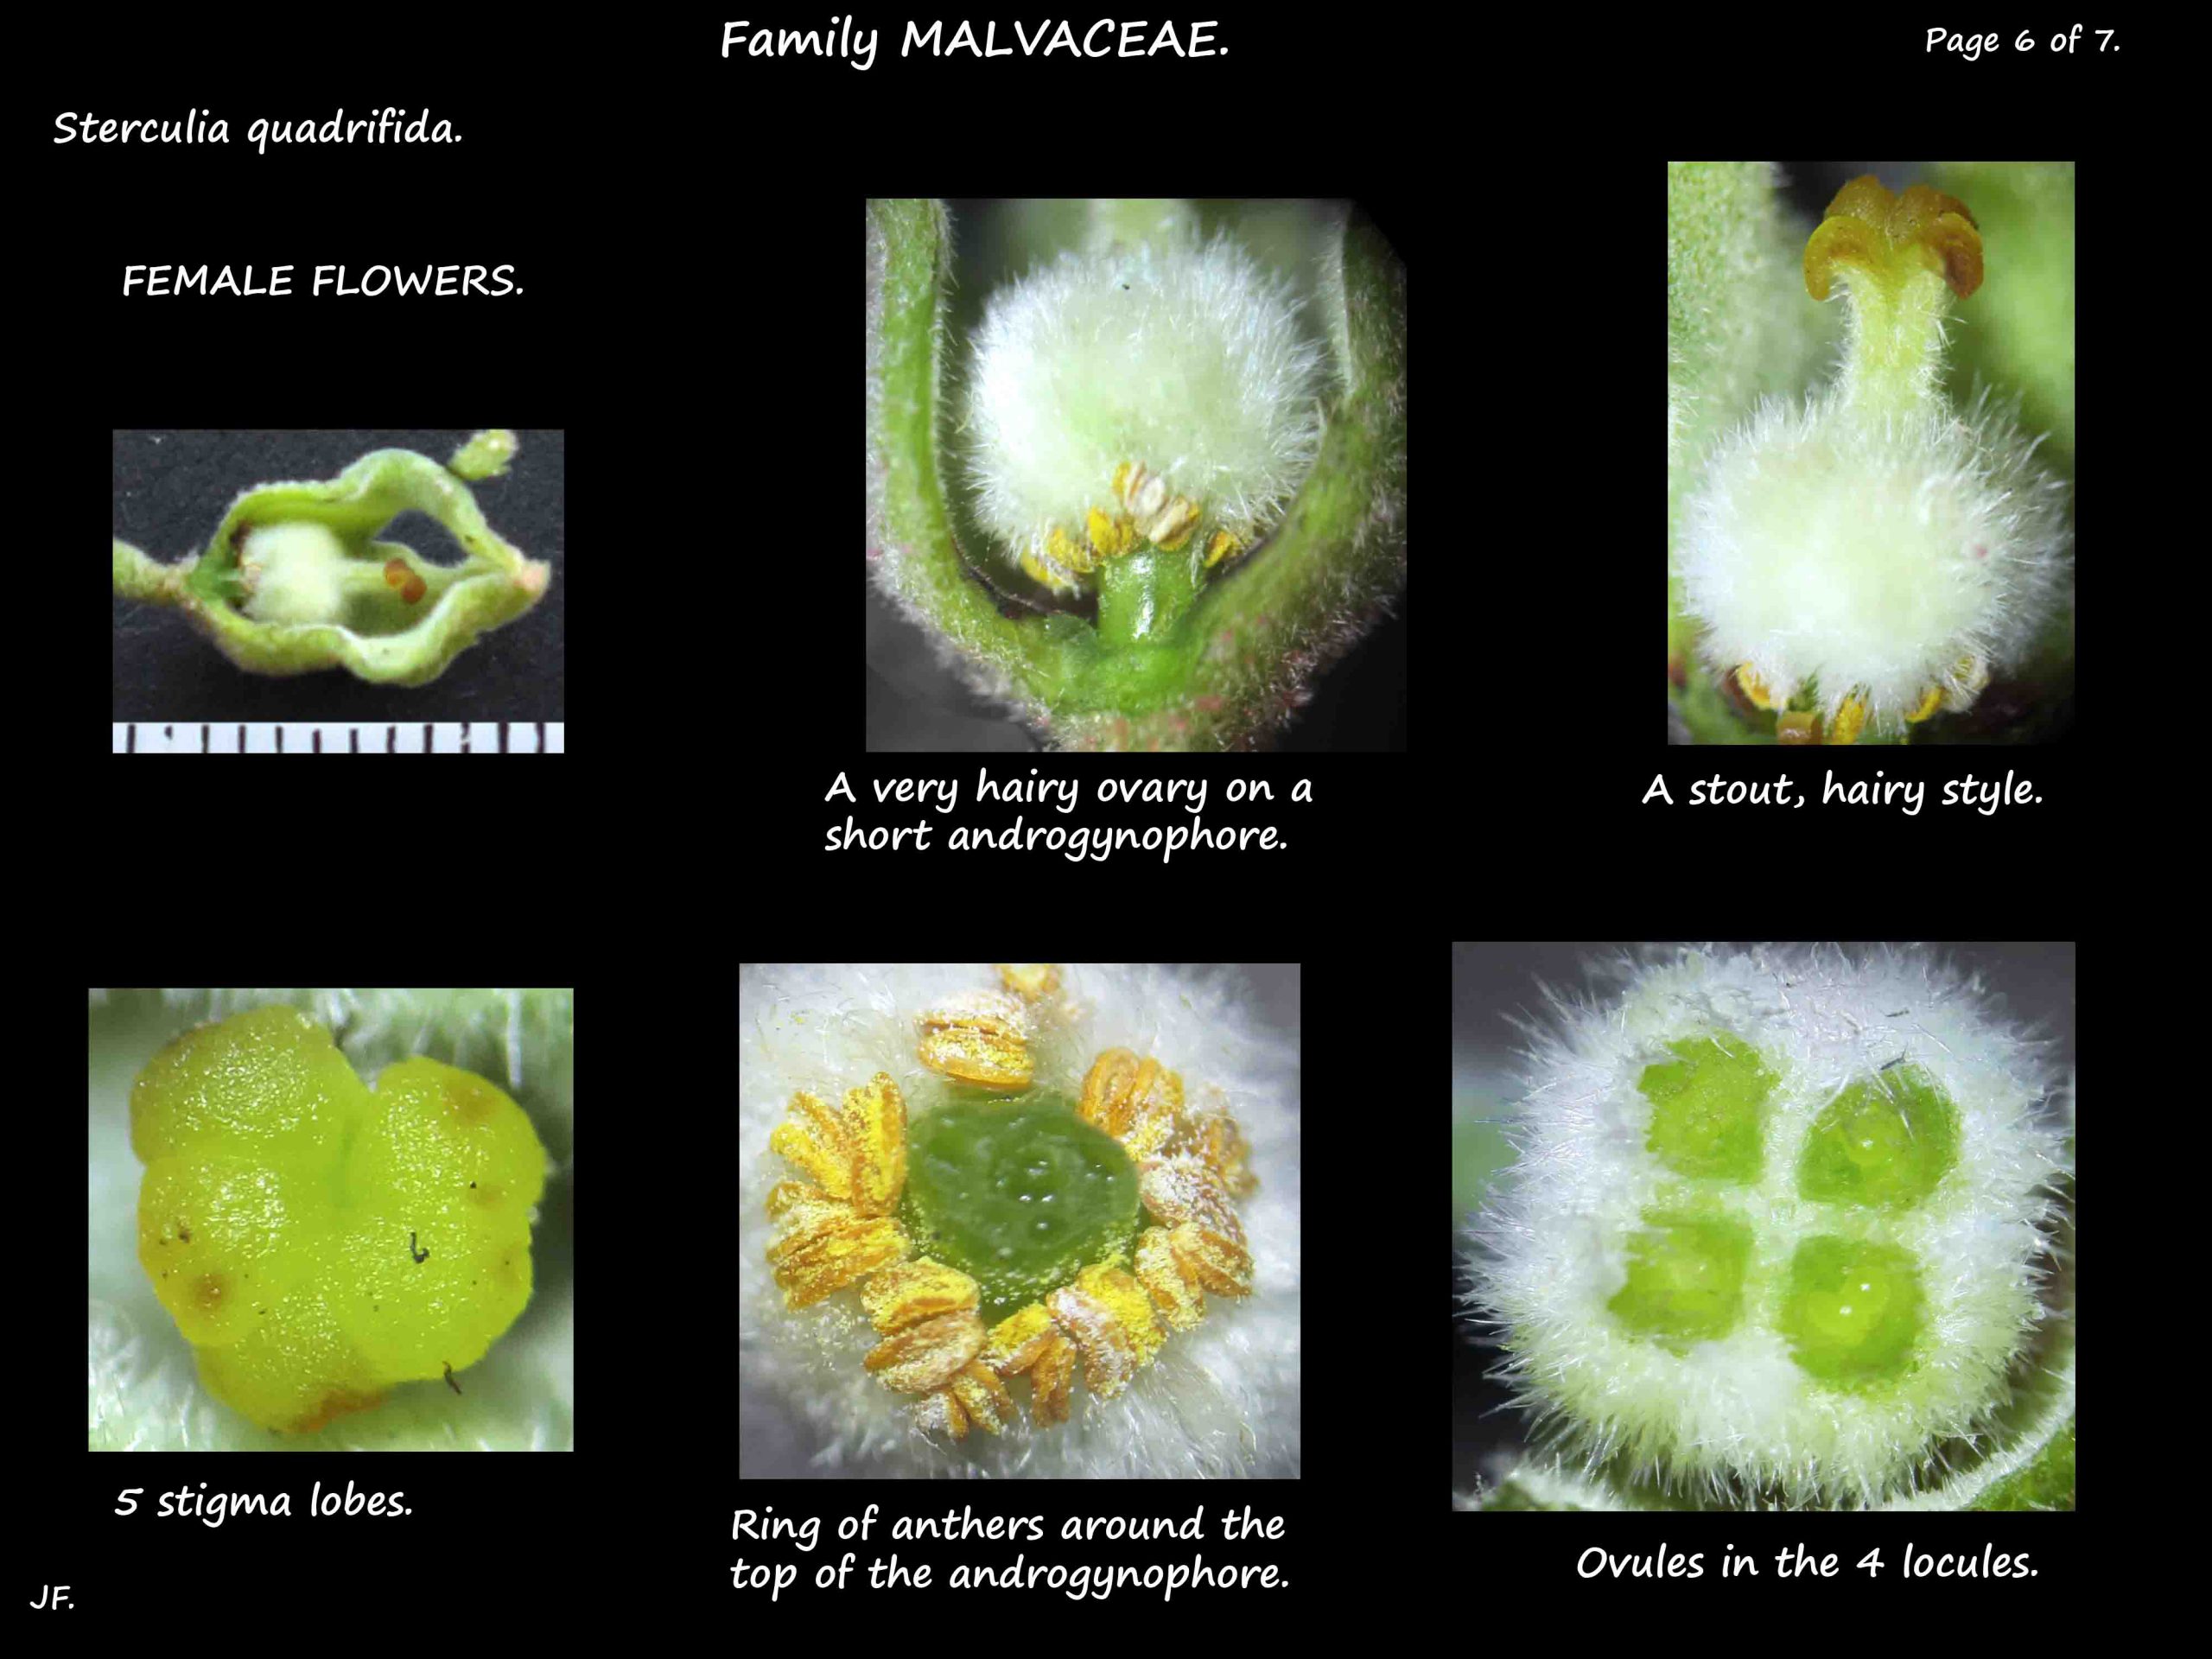 6 Female Sterculia quadrifida flower